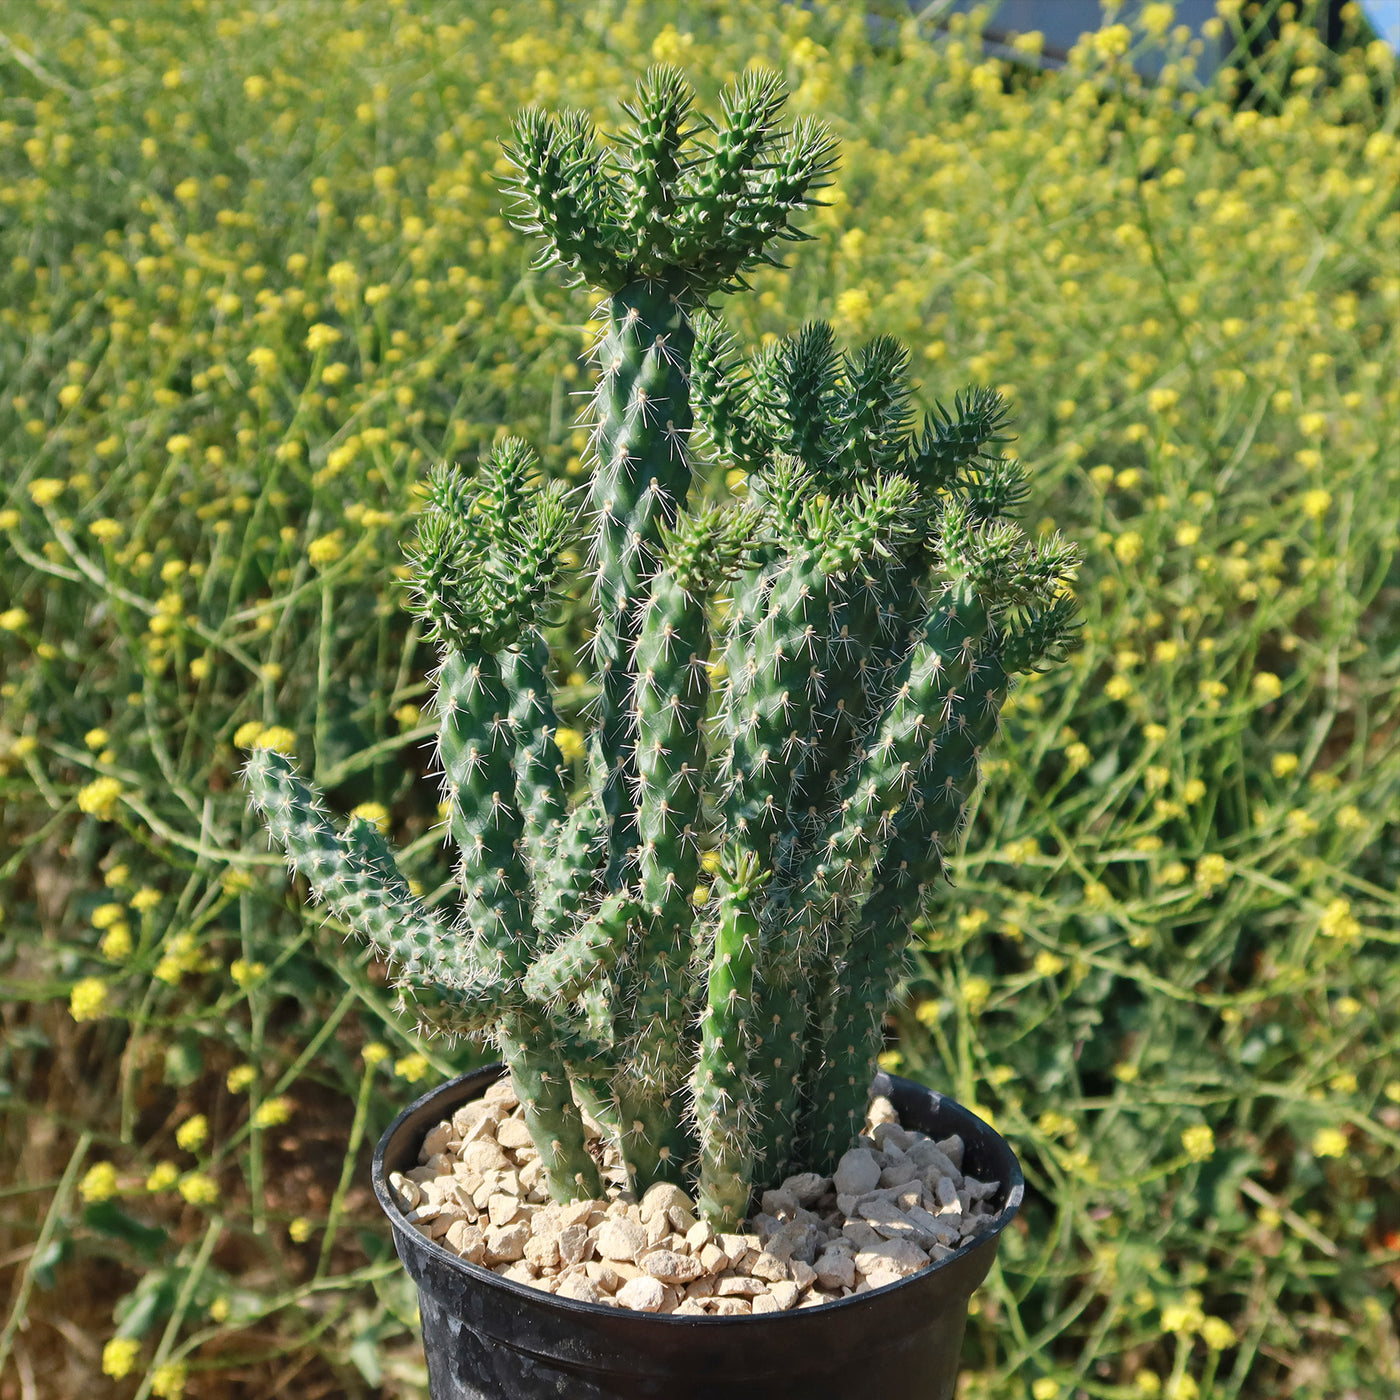 Cholla Cactus - Cylindropuntia cholla